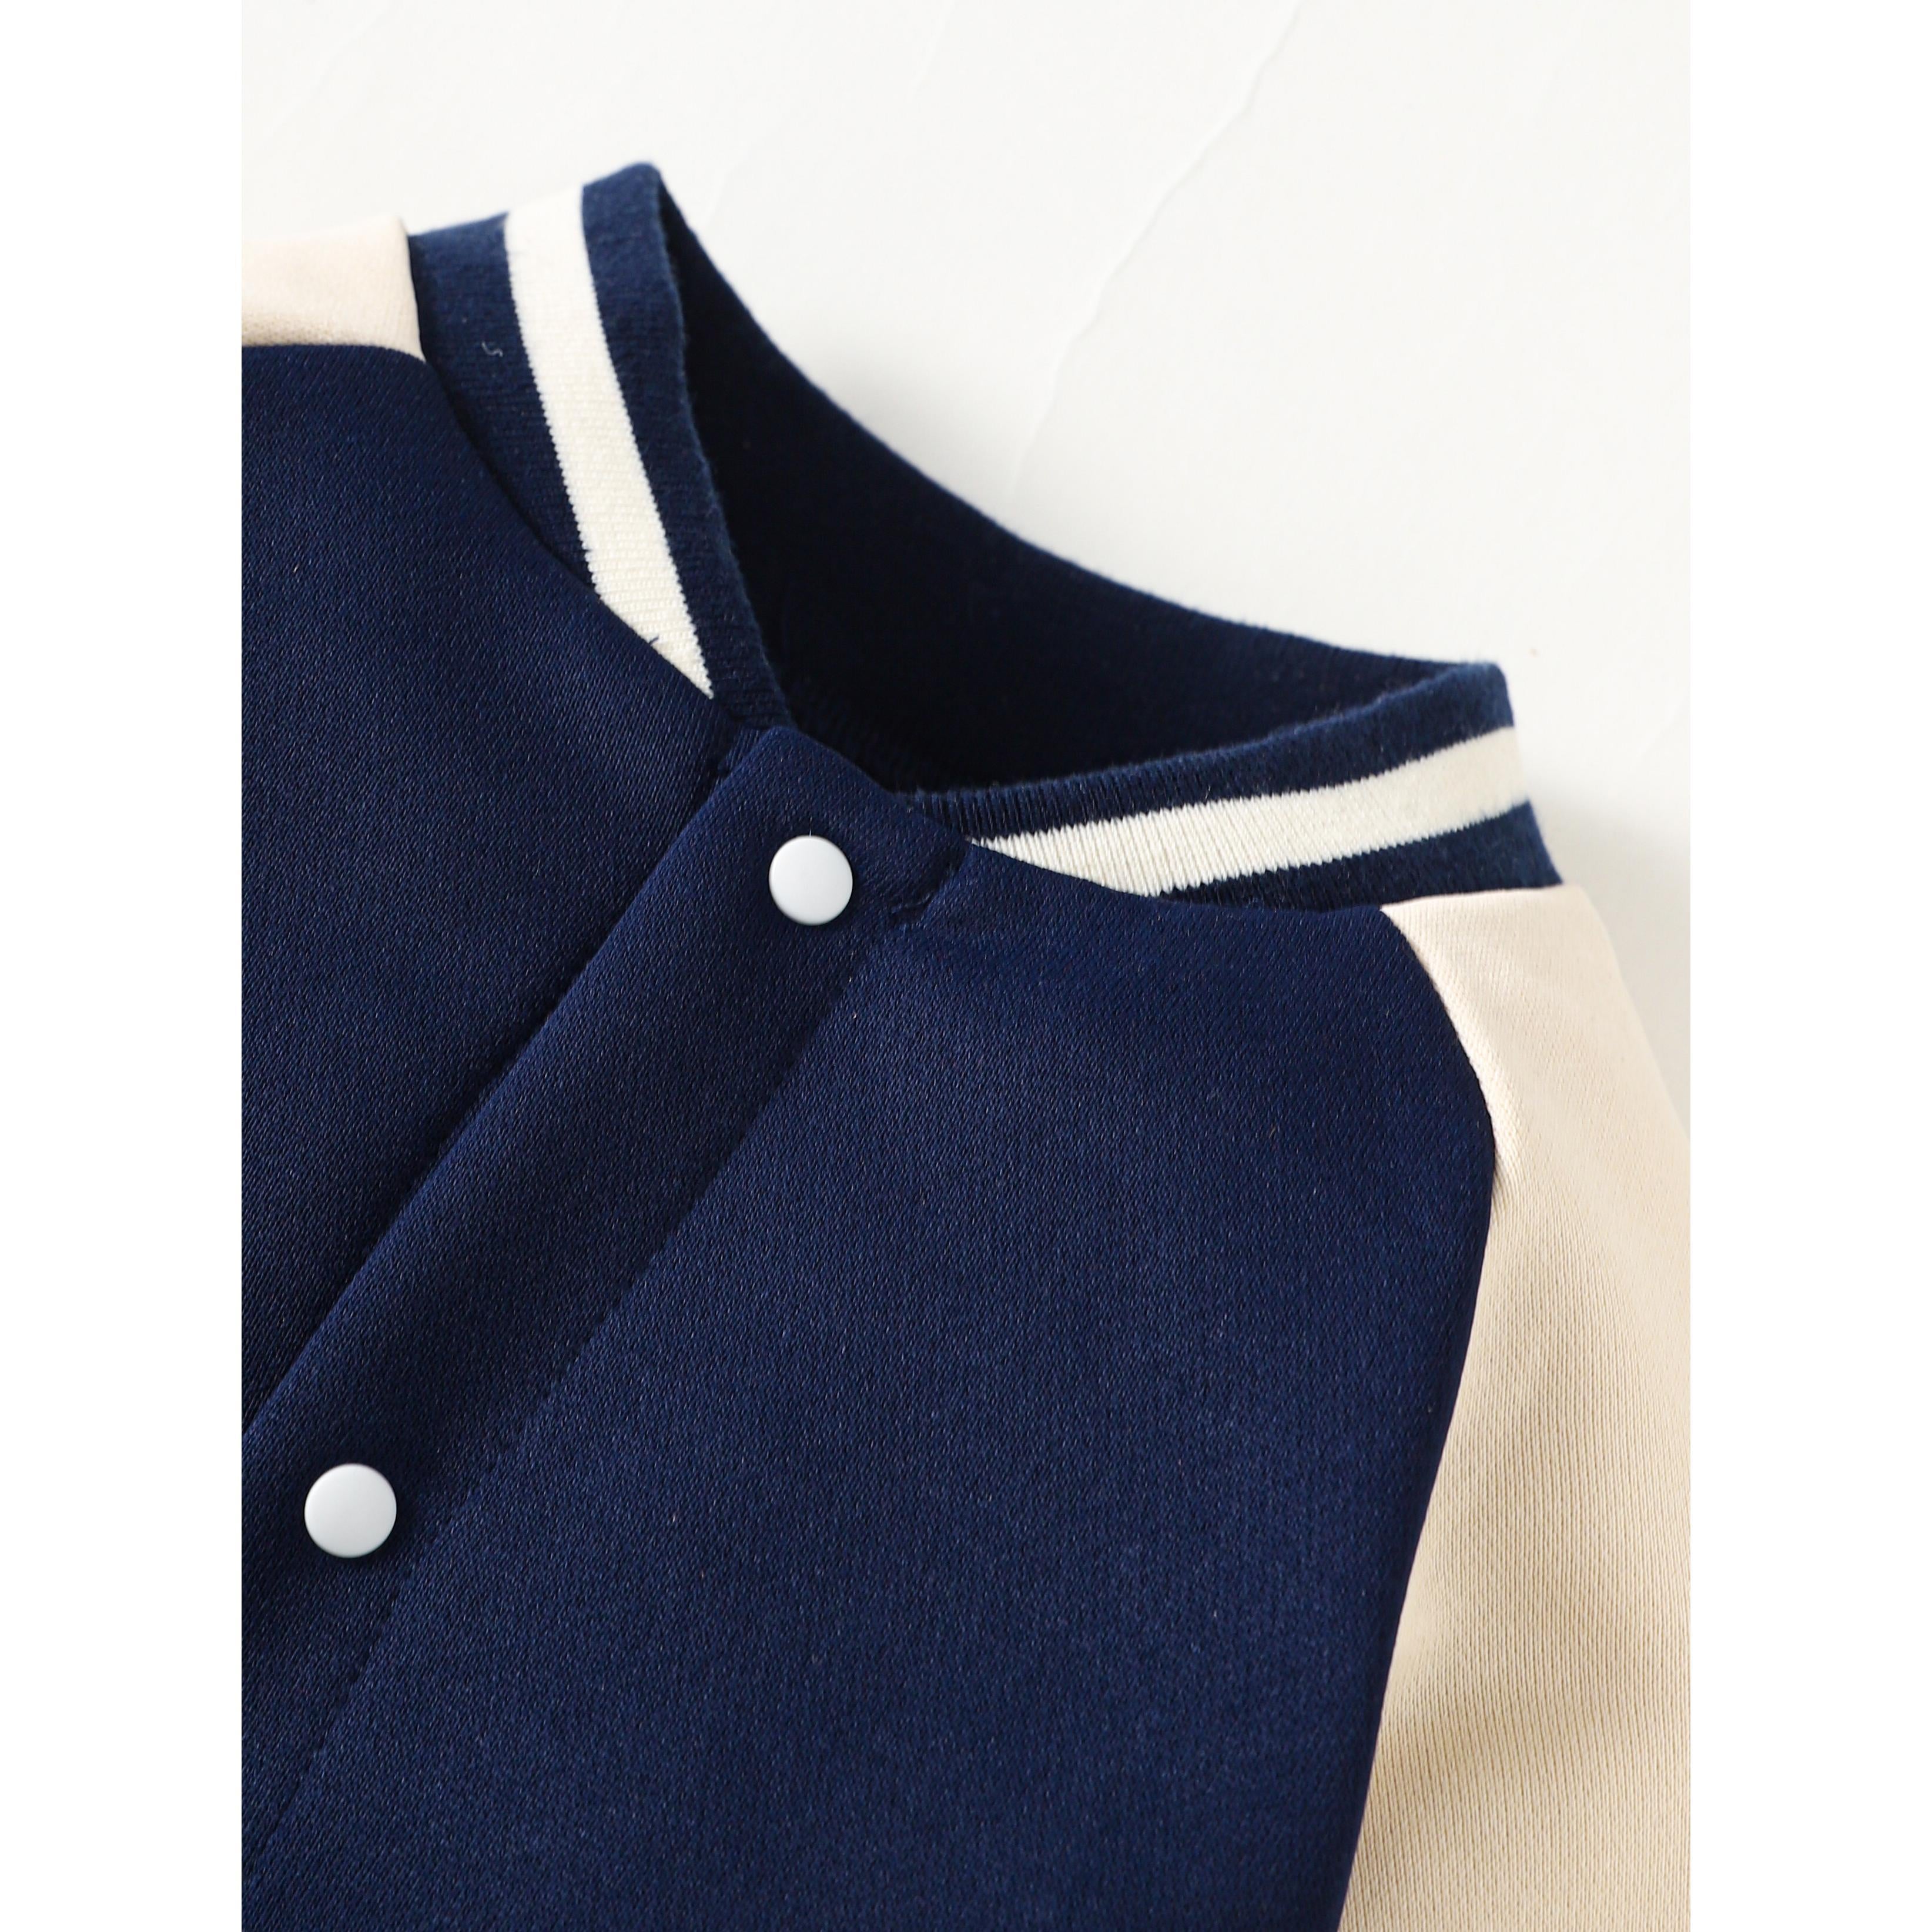 1-18M Ready Stock 1-18M Baby Boys Romper Baseball Patchwork Sleeve Collar Uniform Sweatshirt Jumpsuit One Piece Single Breast Design Bodysuit Blue Catpapa 462307180